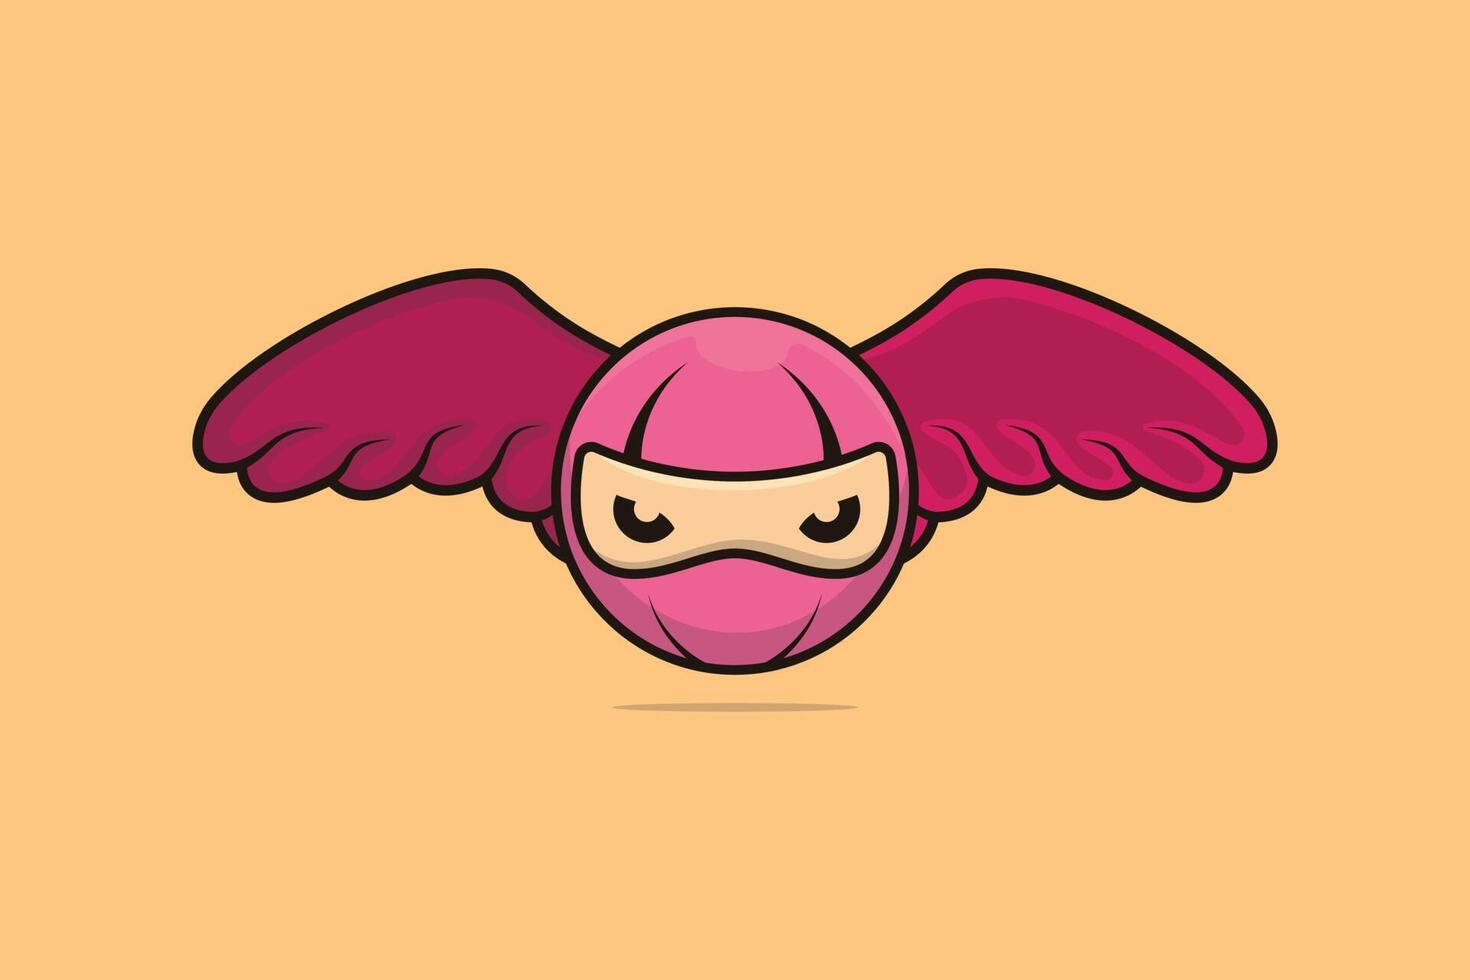 fliegend Ninja Kopf mit Flügel Vektor Illustration. Ninja Menschen Symbol Konzept. Ninja Karikatur Charakter und Flügel Vektor Design. Ninja Logo Vektor Kopf mit wütend Gesicht.